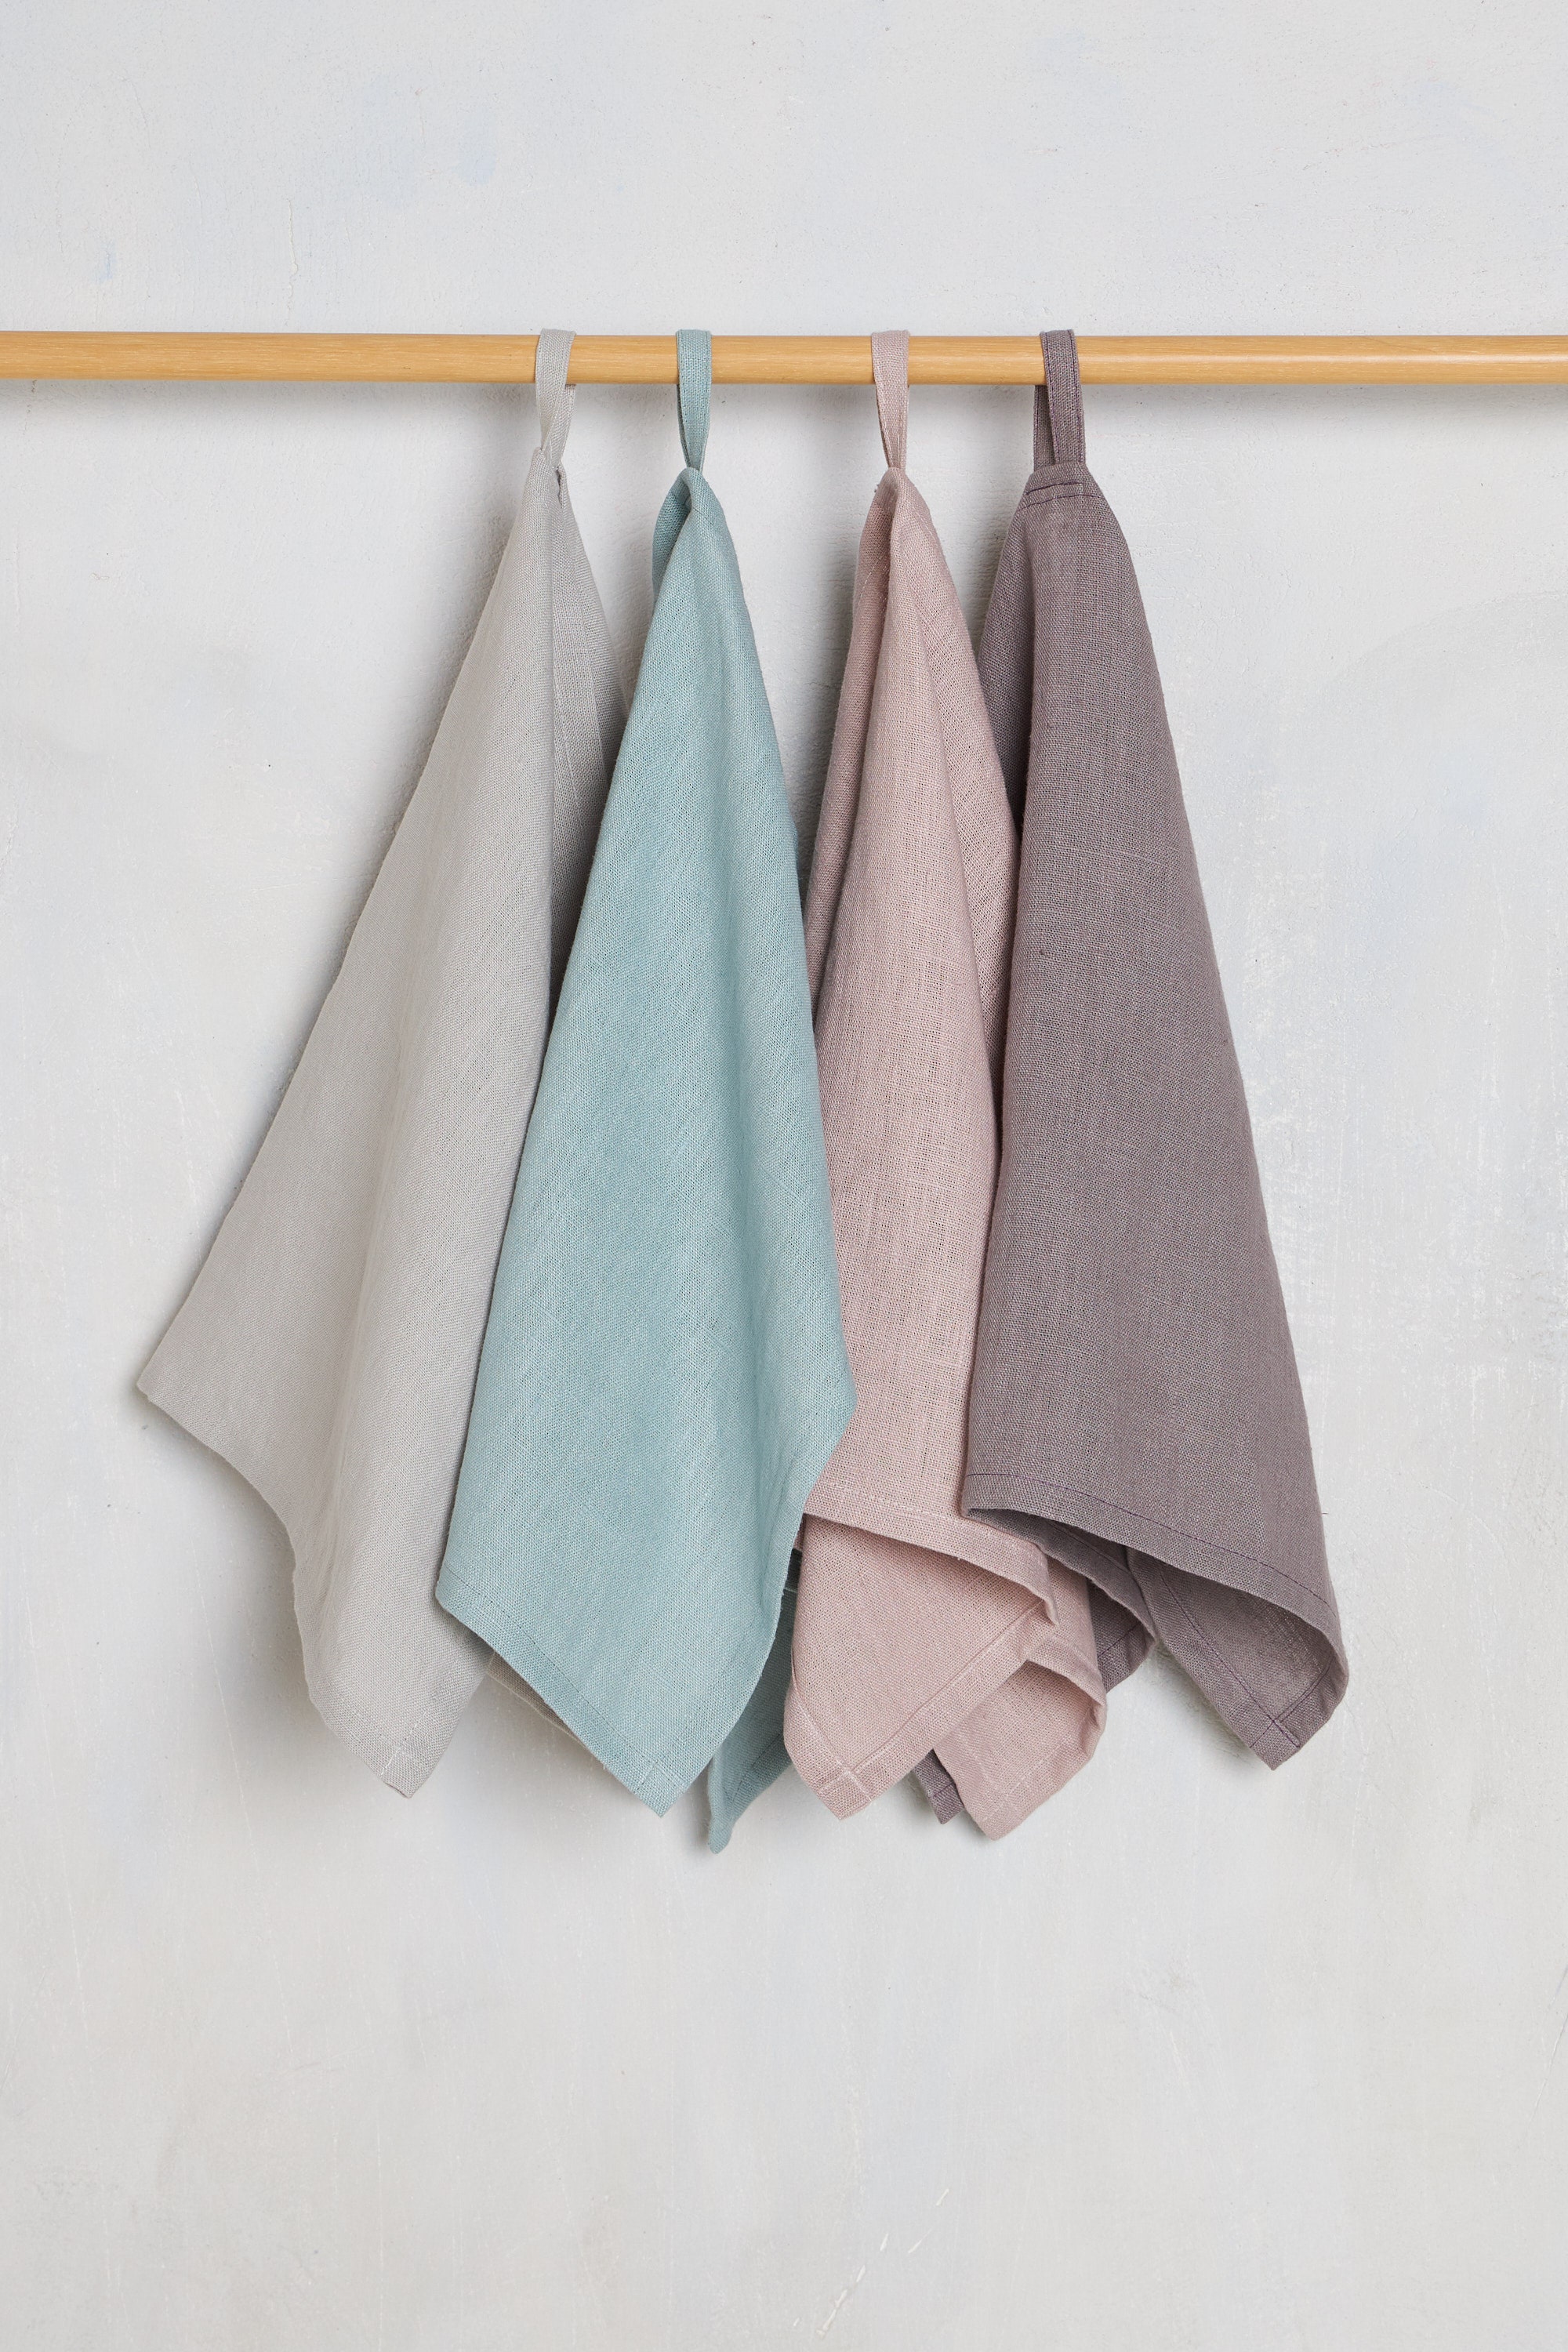 Linen Kitchen Towel-Linen tea towel. Washed linen kitchen towel. Hand  towel. Heavy linen!